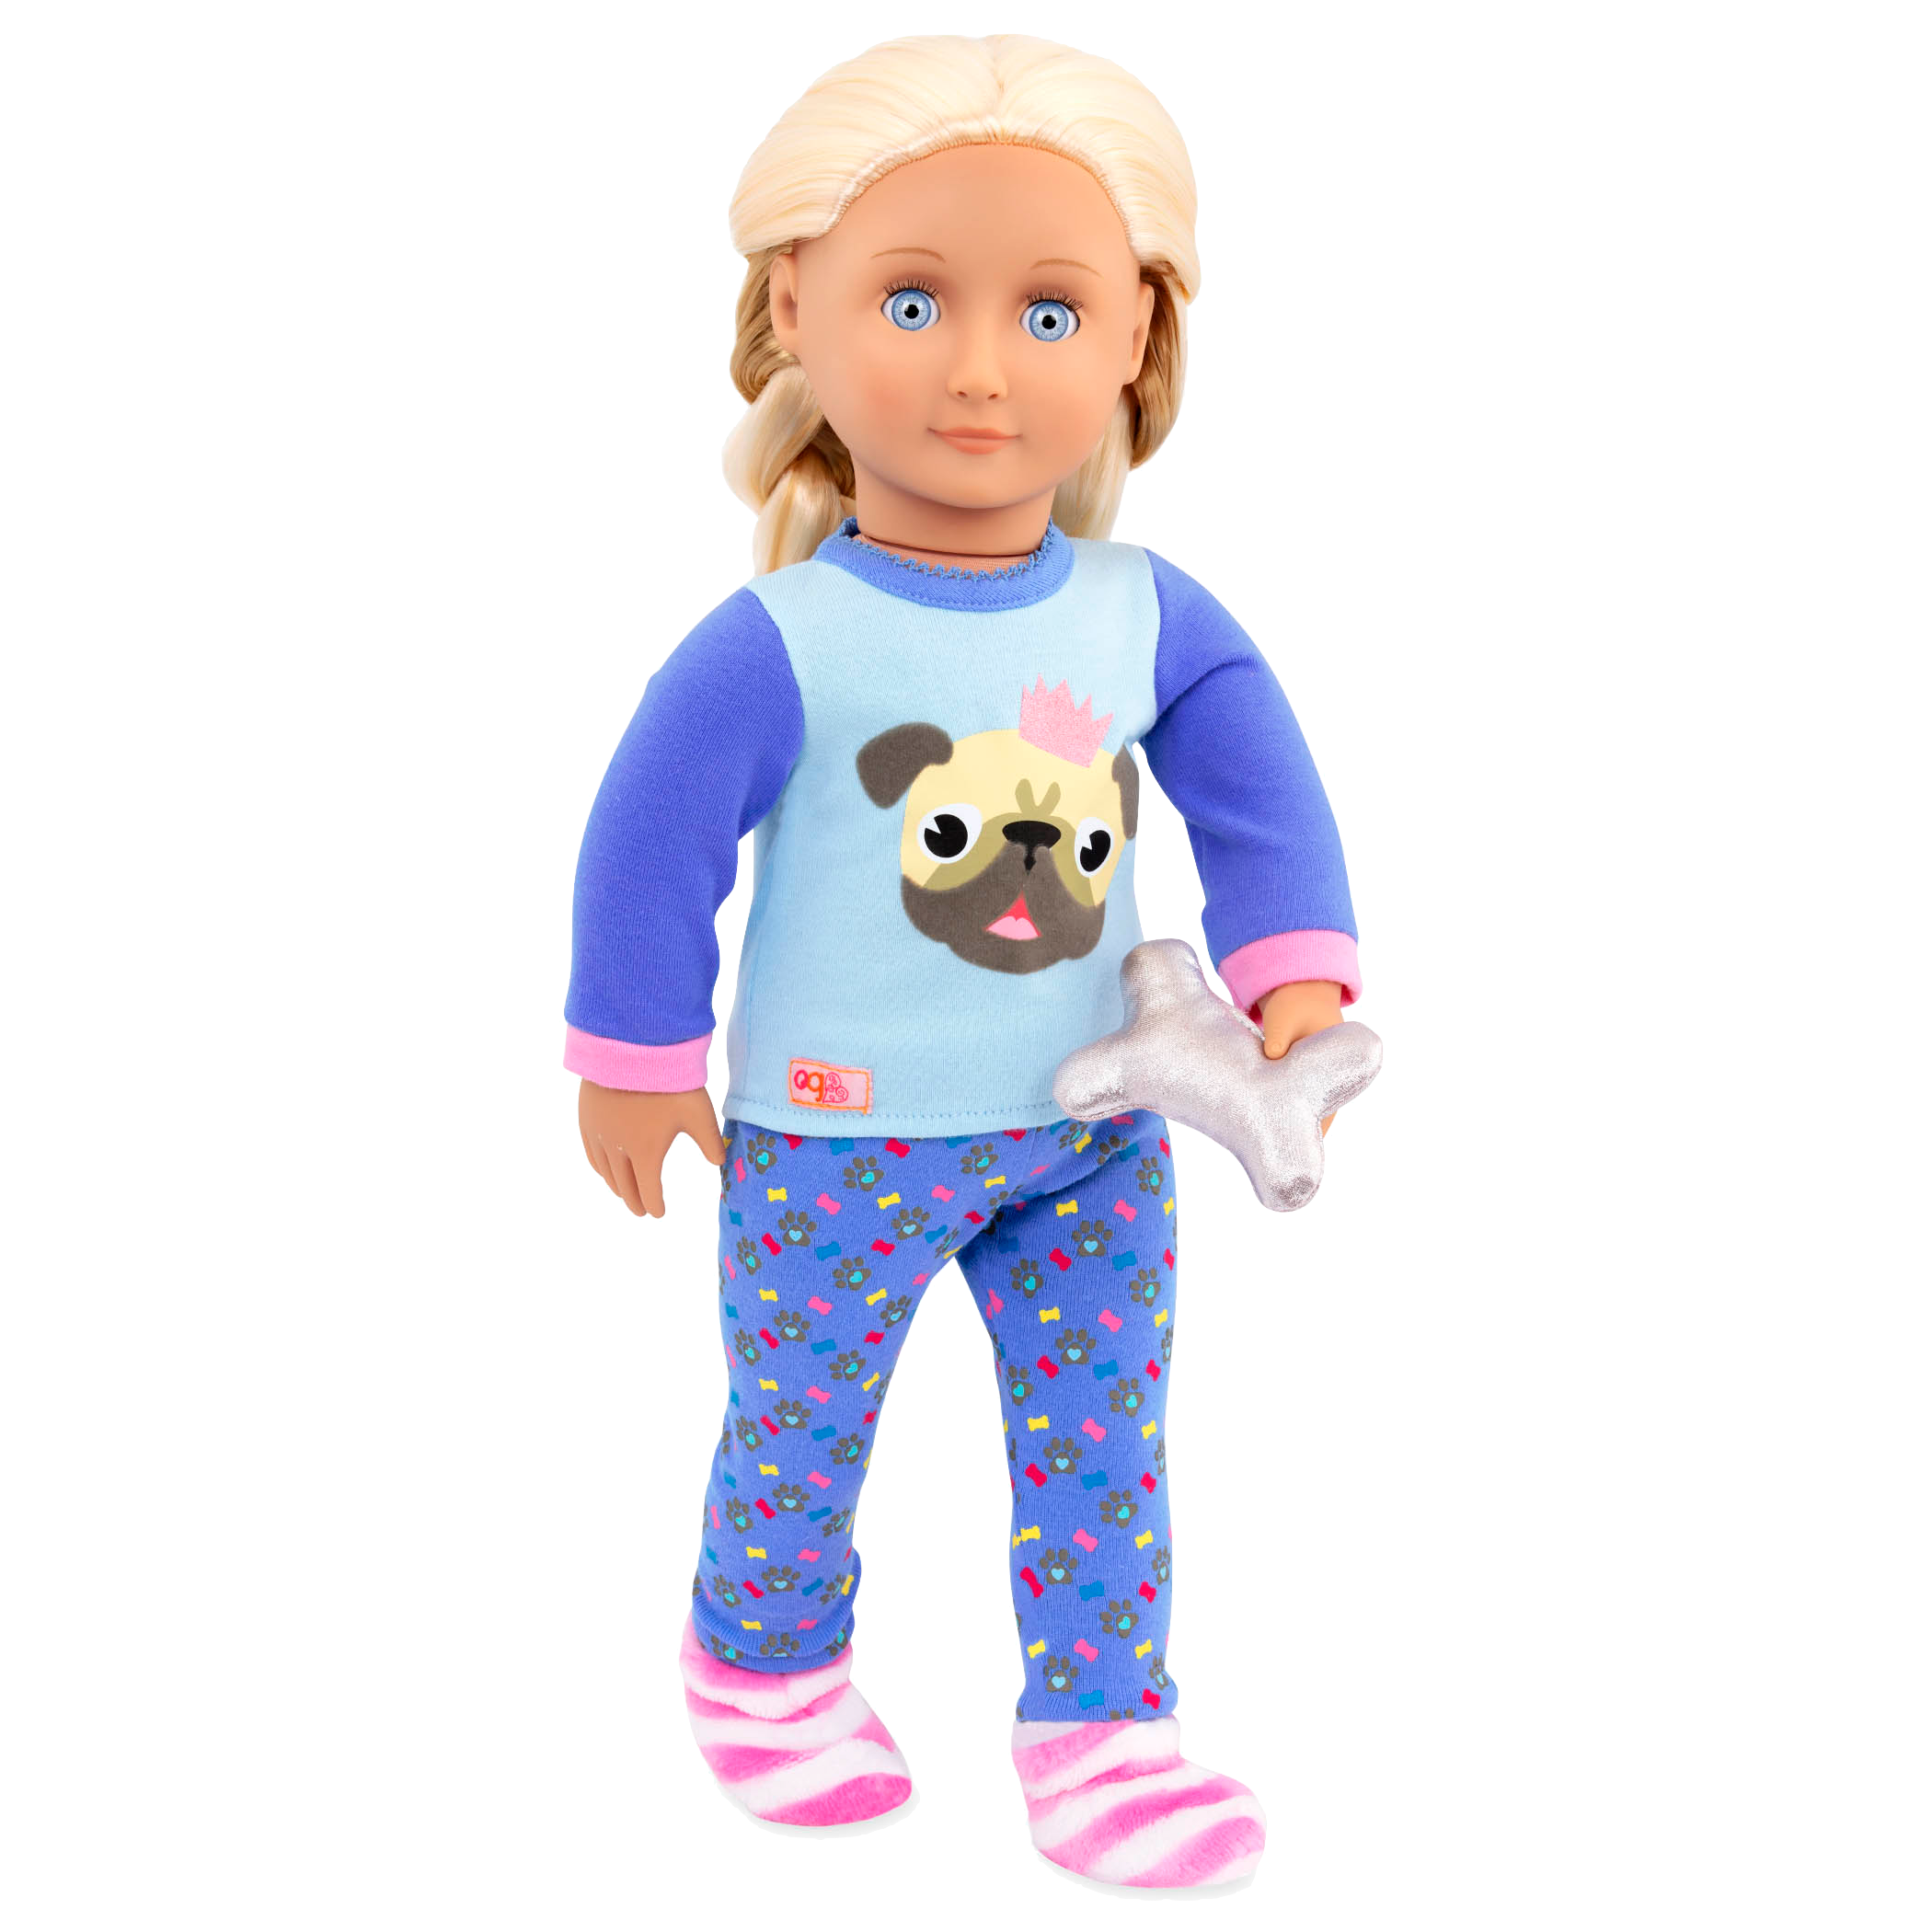 Pug-themed pajamas for 18-inch doll